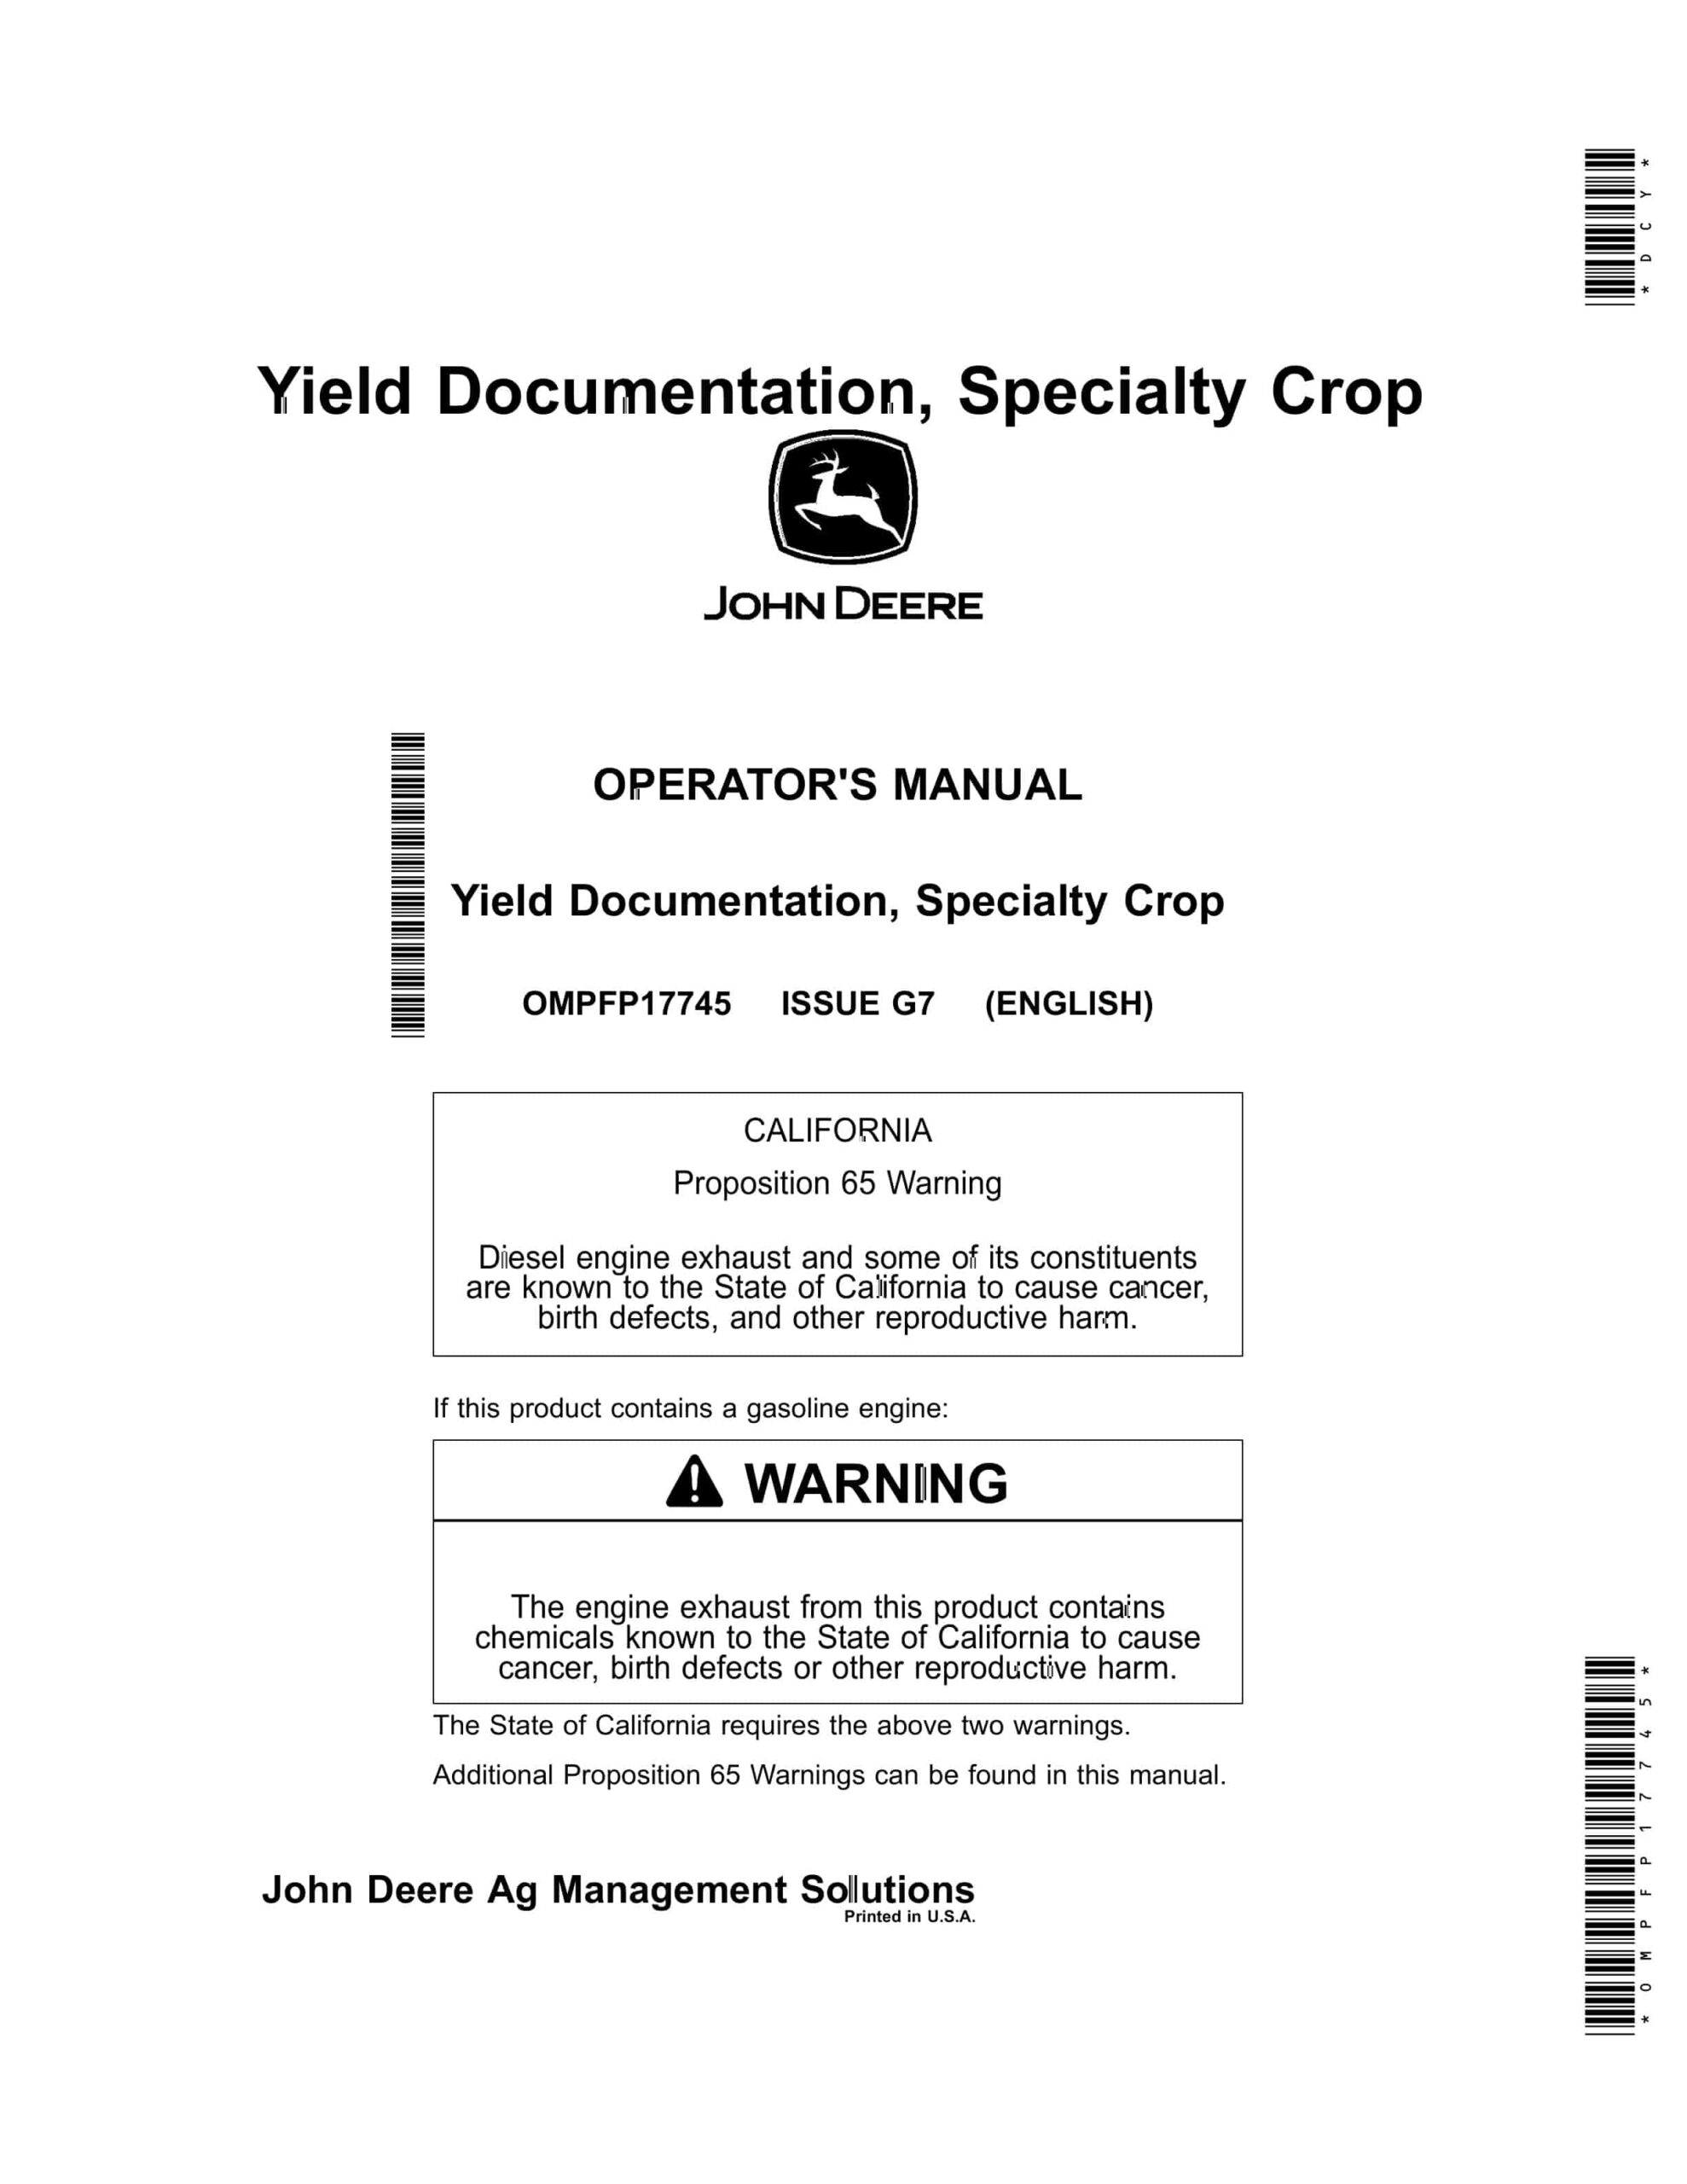 John Deere Yield Documentation, Specialty Crop Operator Manual OMPFP17745-1